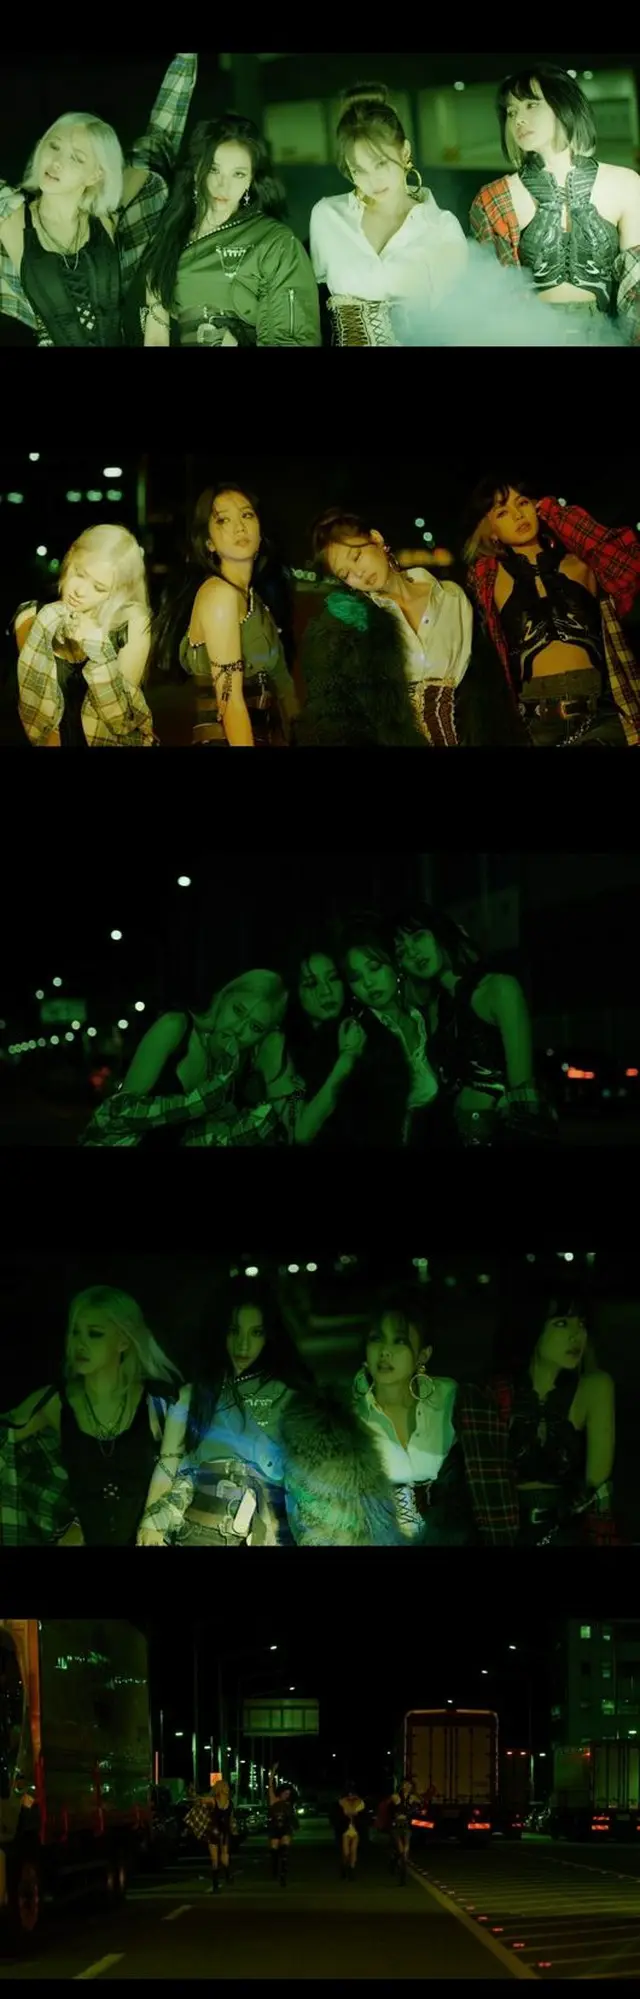 「BLACKPINK」の初のアルバムのタイトル曲「Lovesick Girls」のコンセプトを垣間見ることができるティーザー映像が公開された。（画像提供:OSEN）